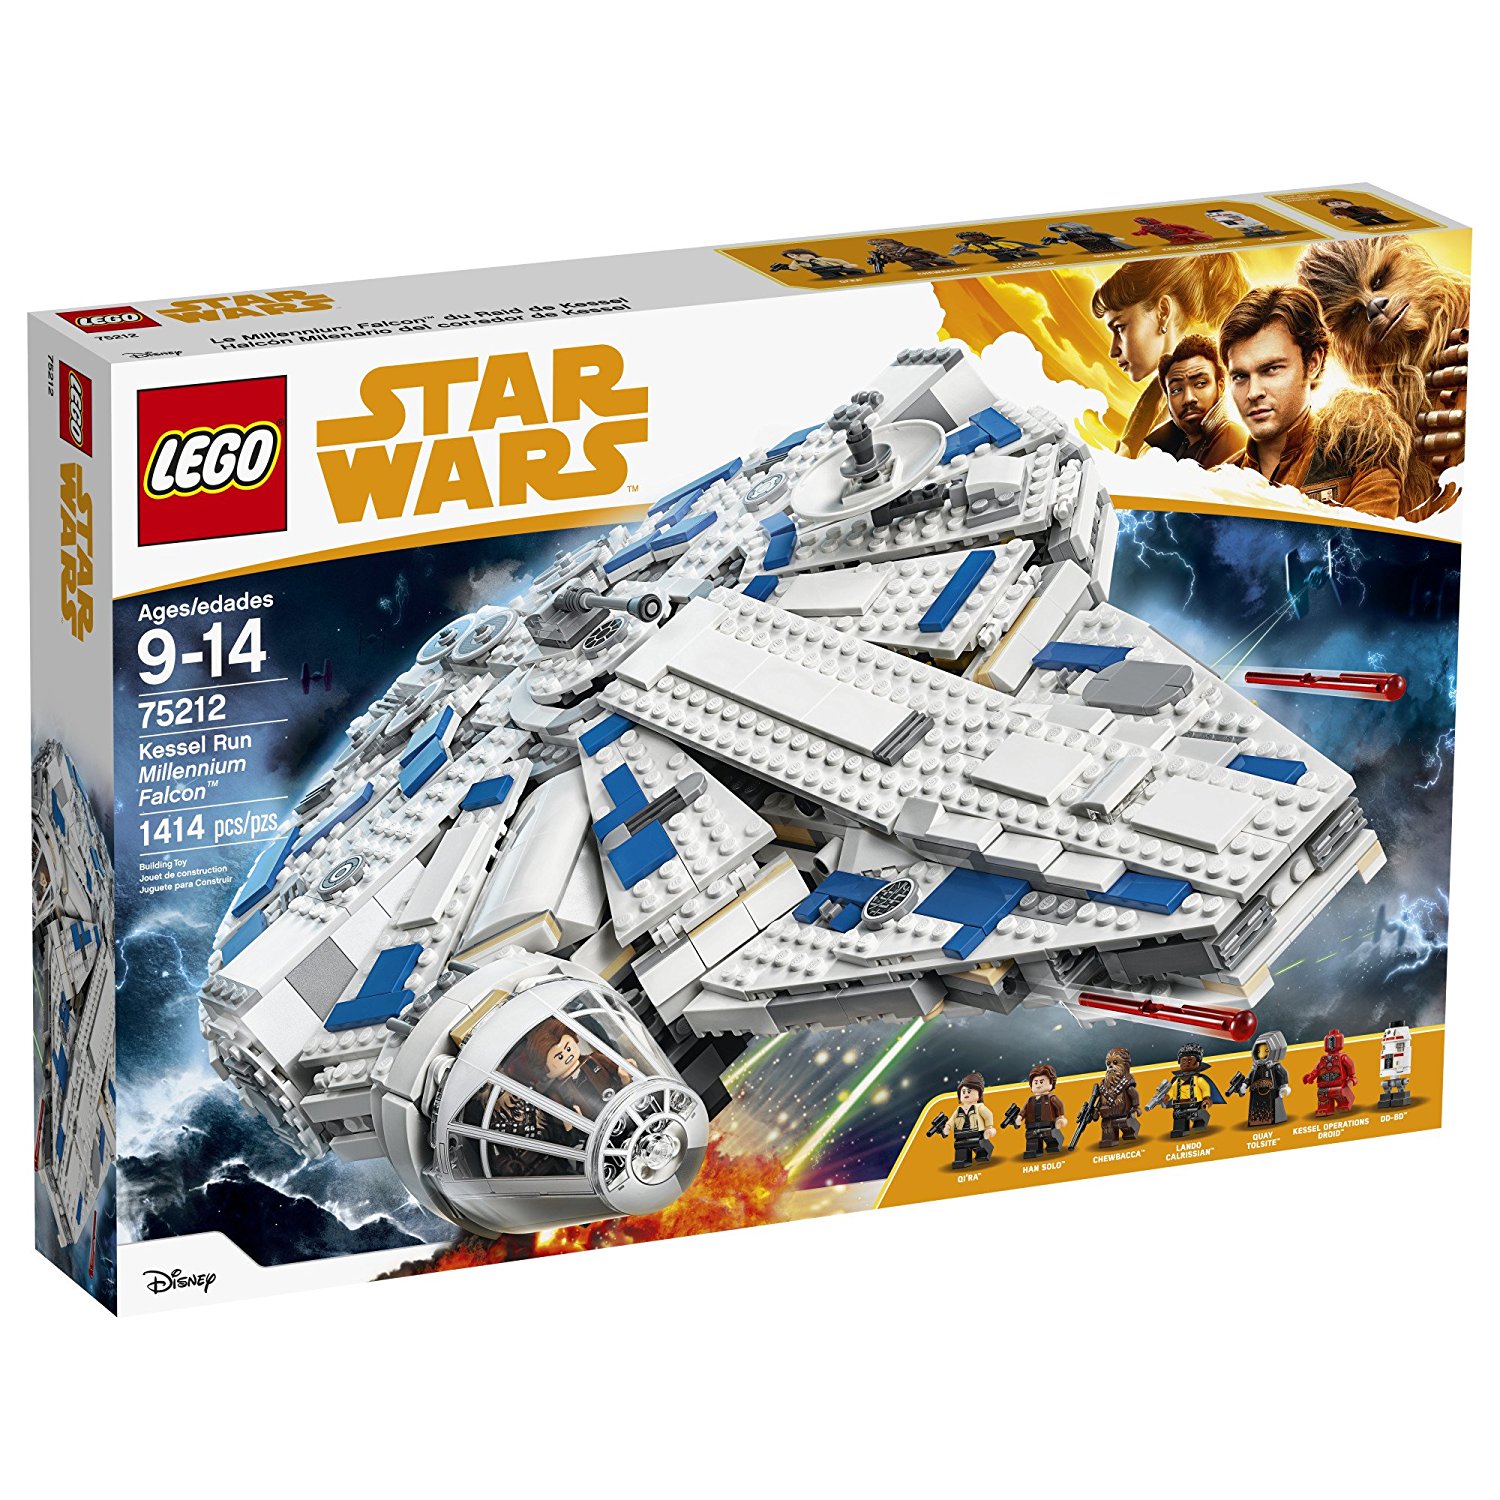 Solo: ASWS Kessel Run Millennium Falcon Lego Set 1